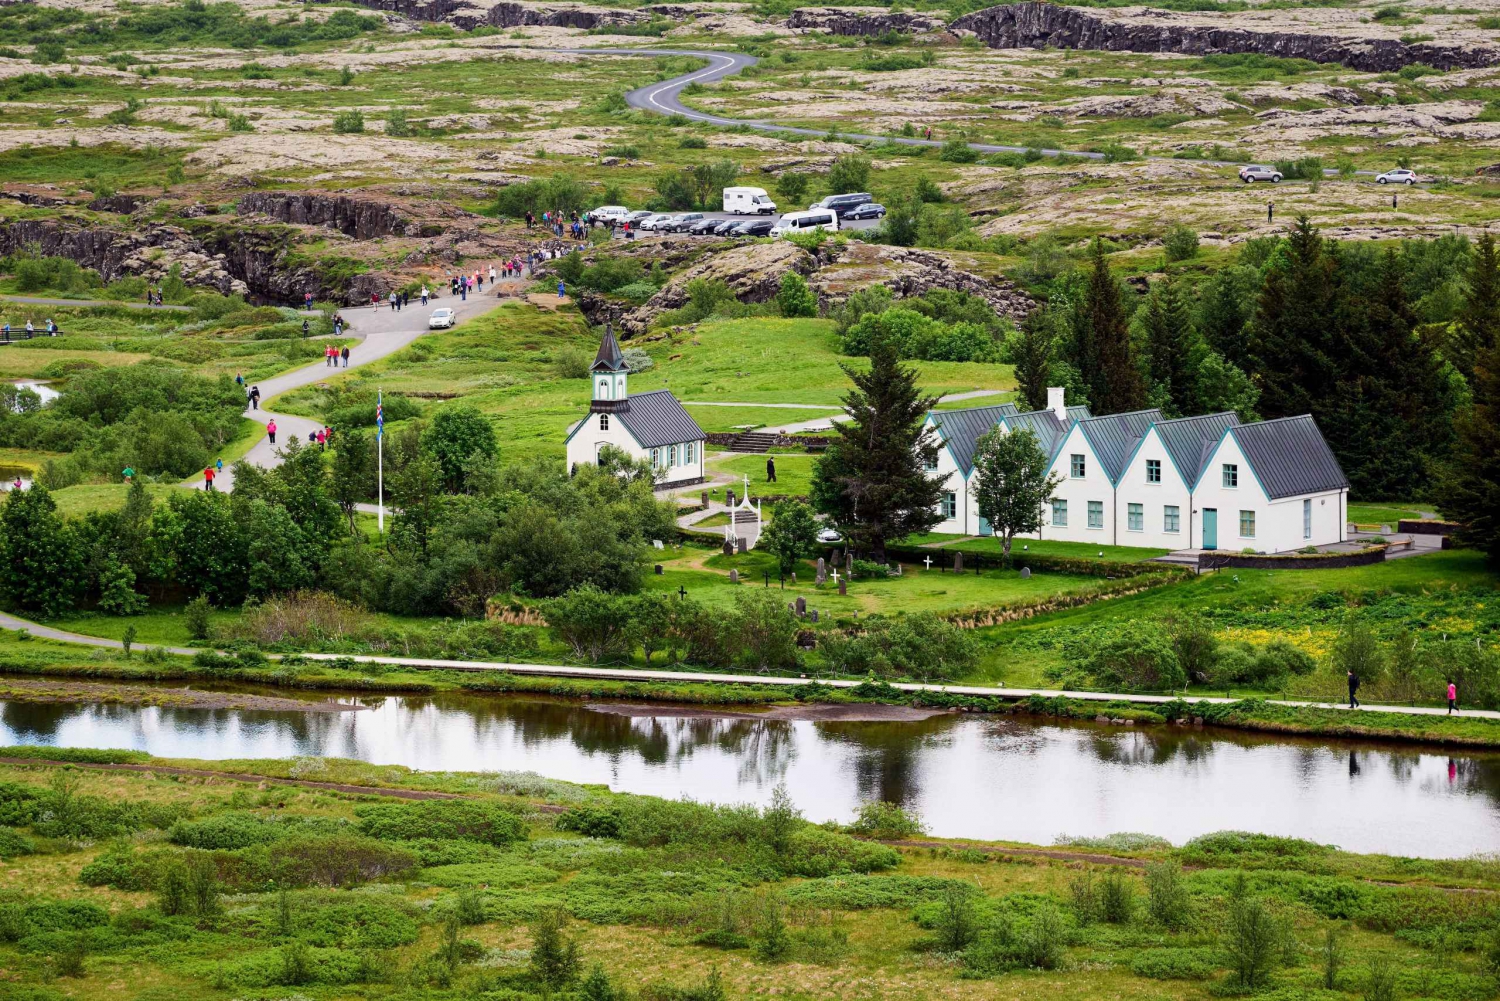 Iceland Stopover: The Golden Circle Tour